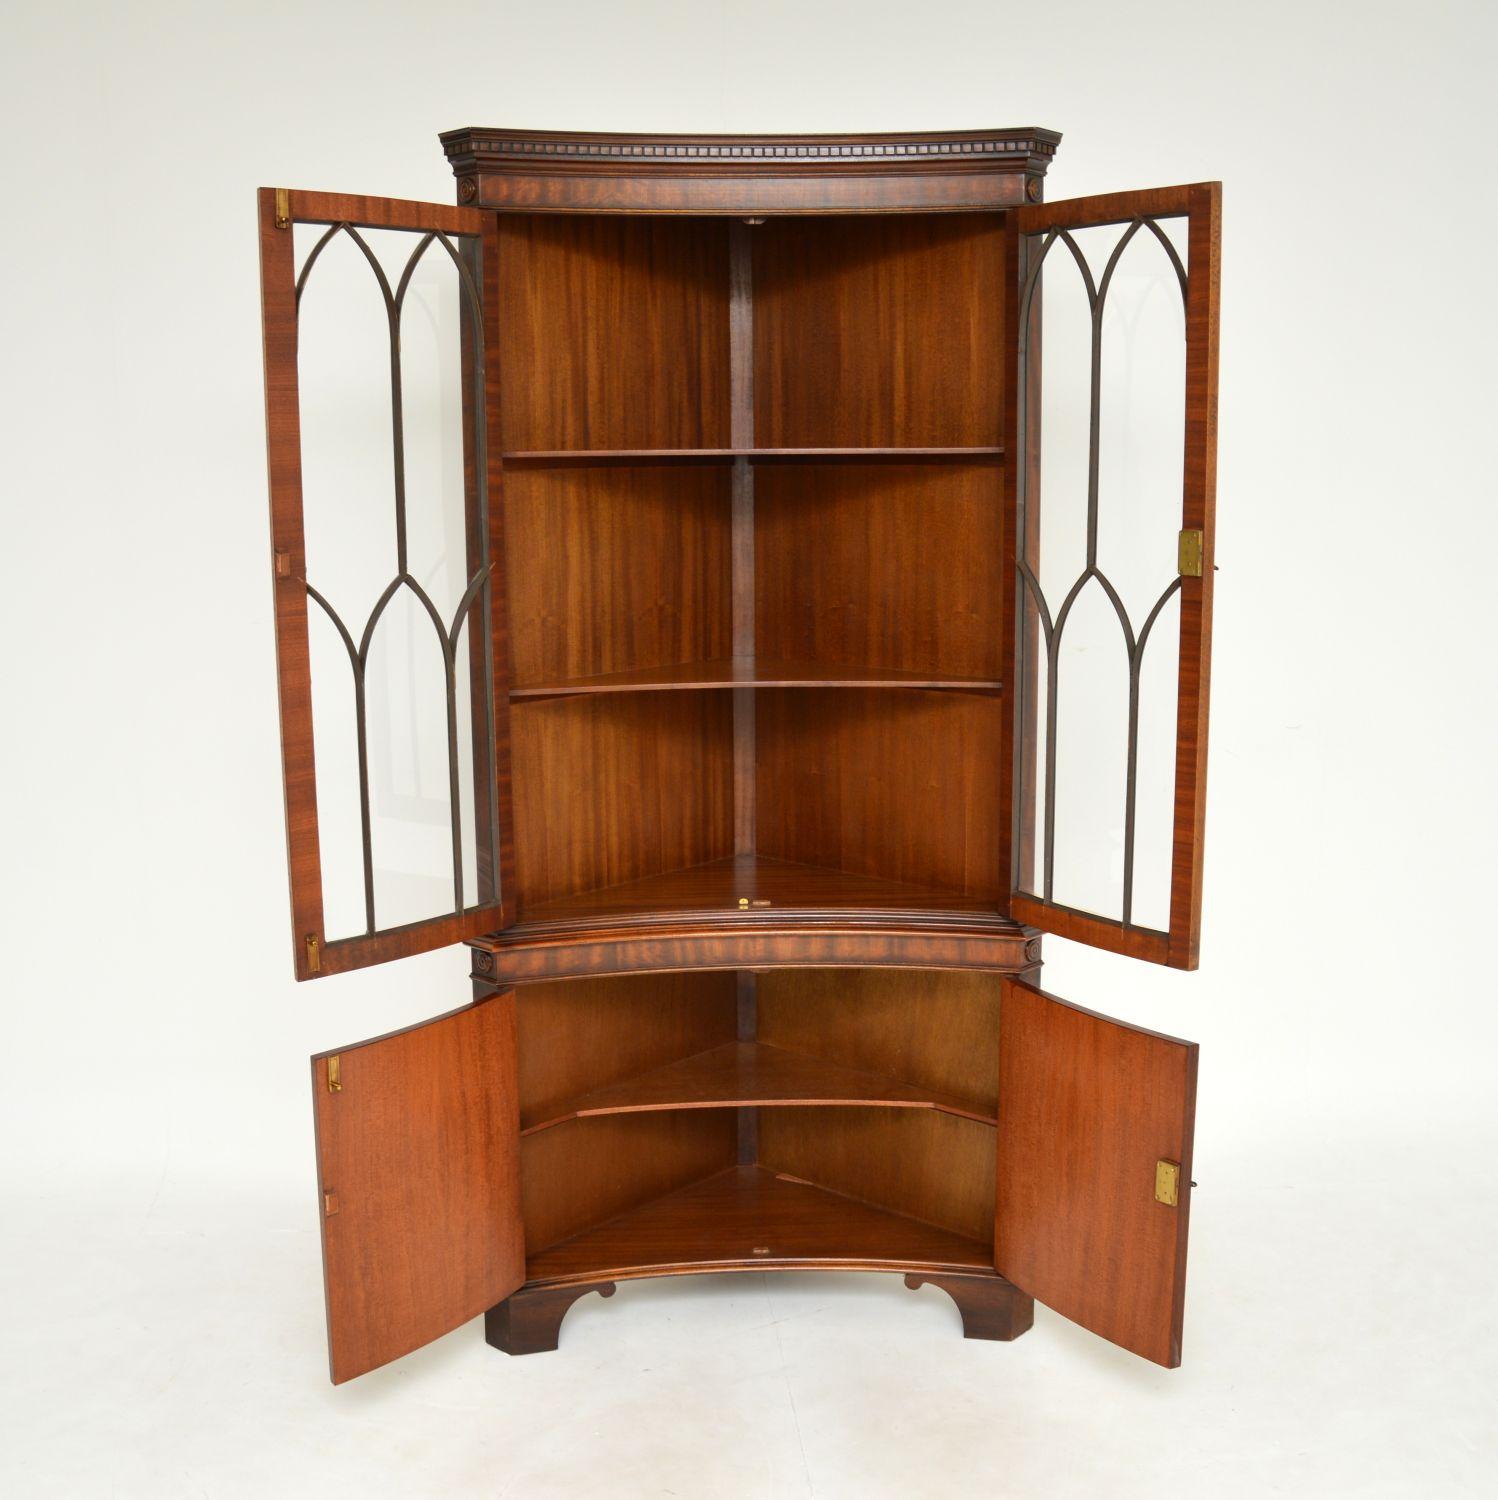 English Antique Georgian Style Corner Cabinet